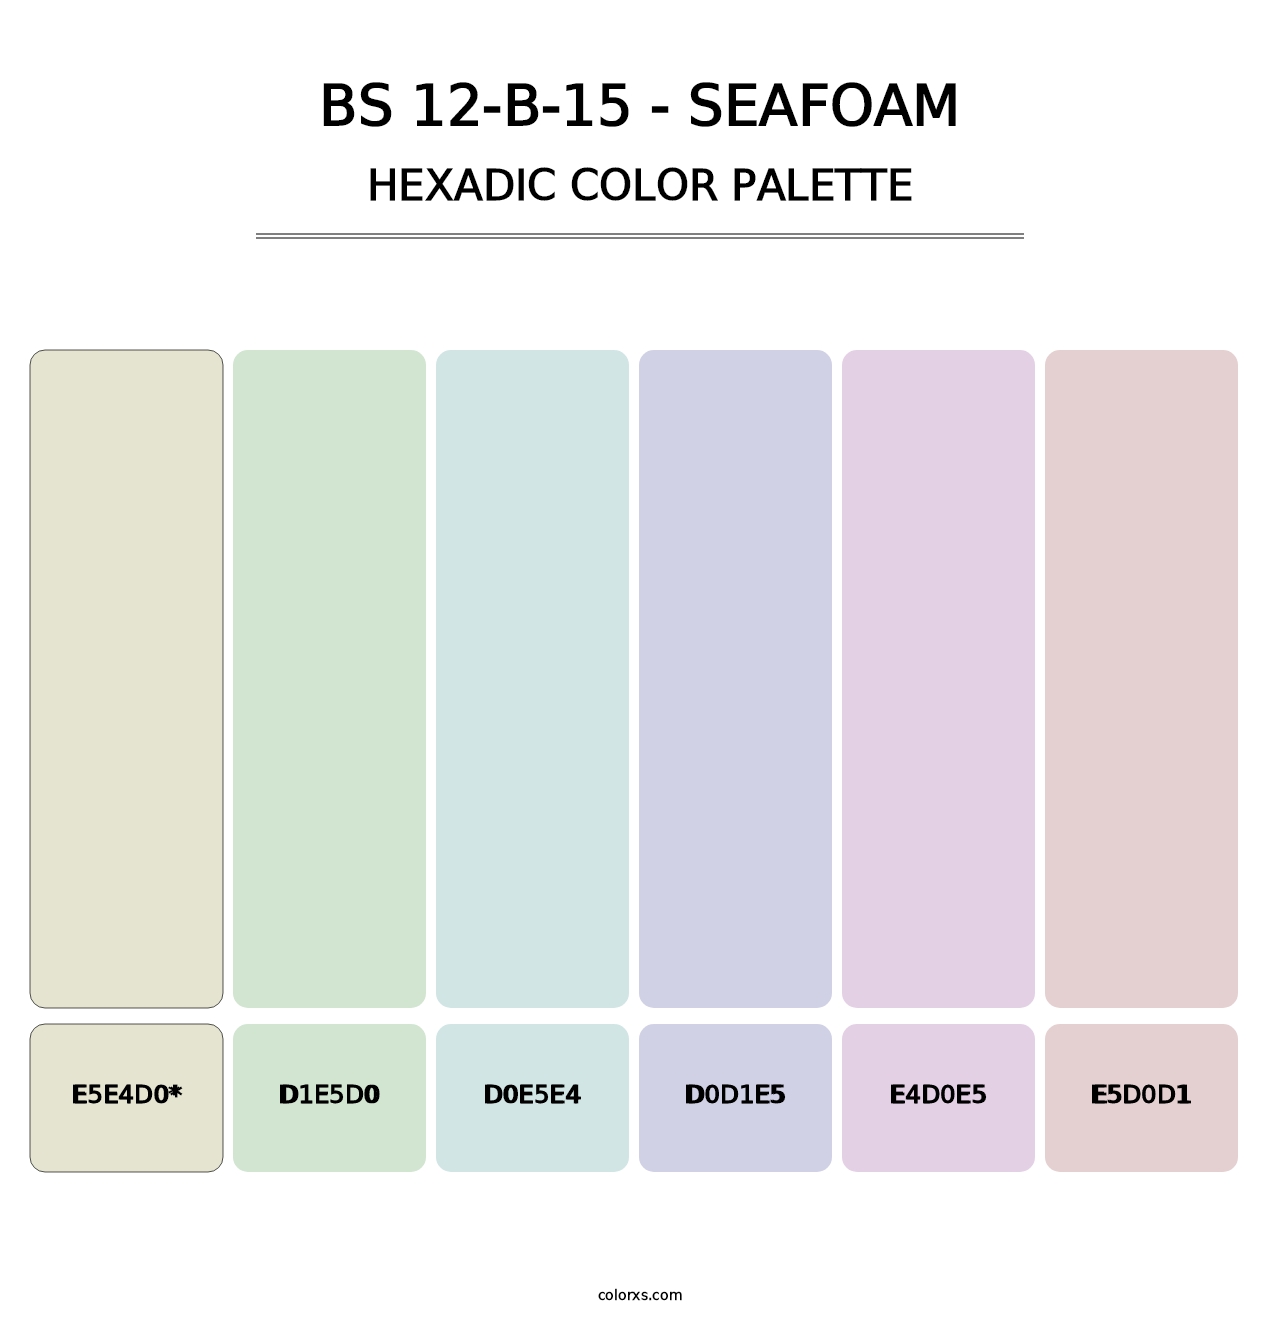 BS 12-B-15 - Seafoam - Hexadic Color Palette